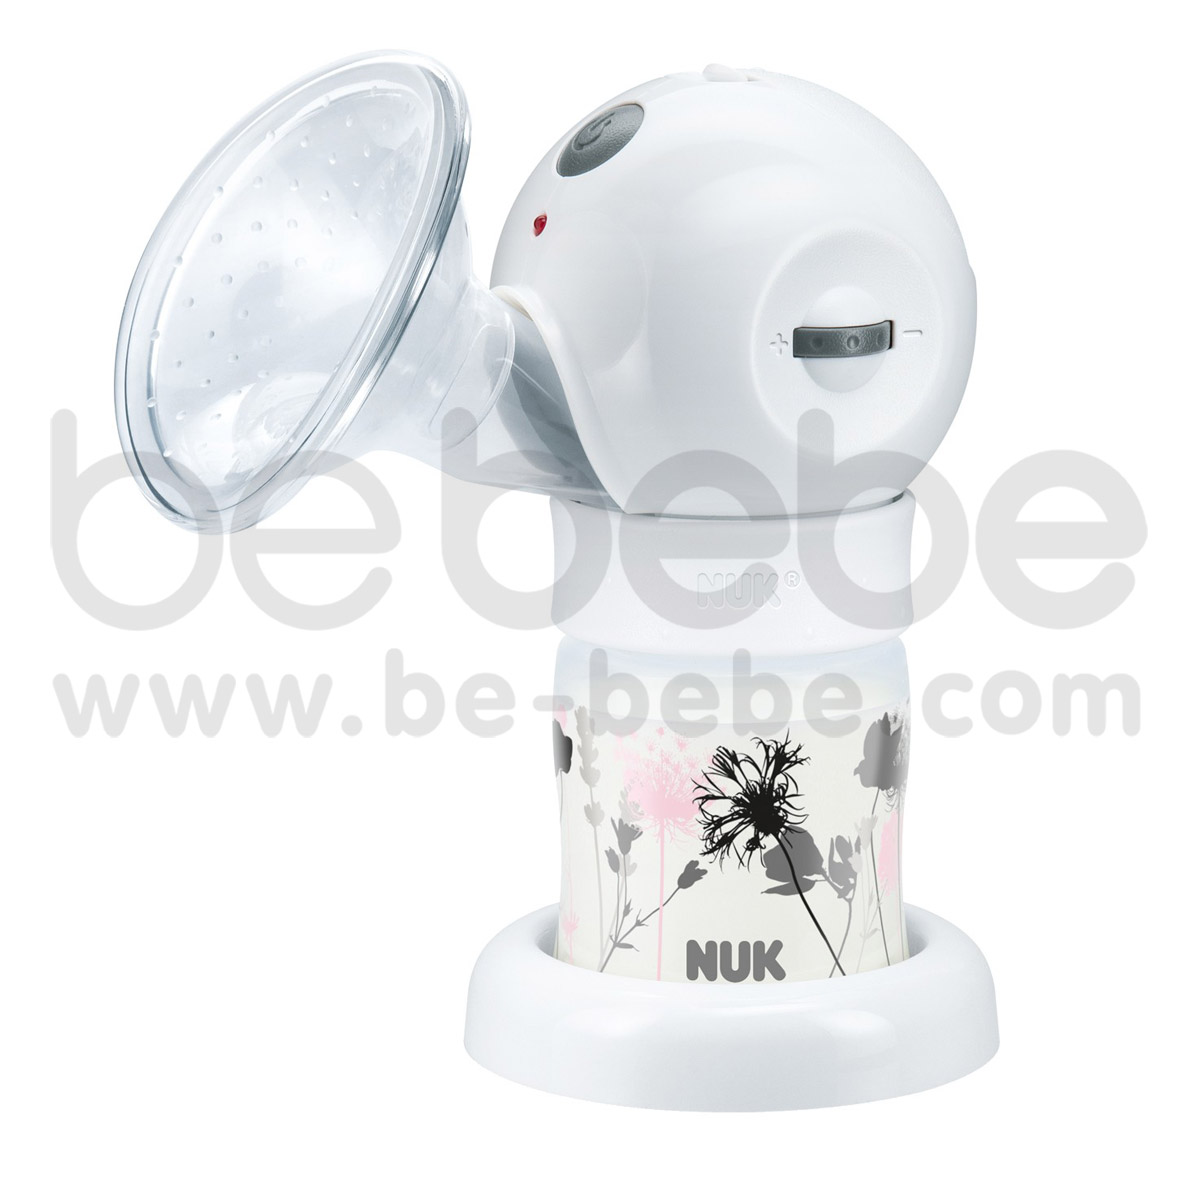 NUK :  Luna Electric Breast Pump  